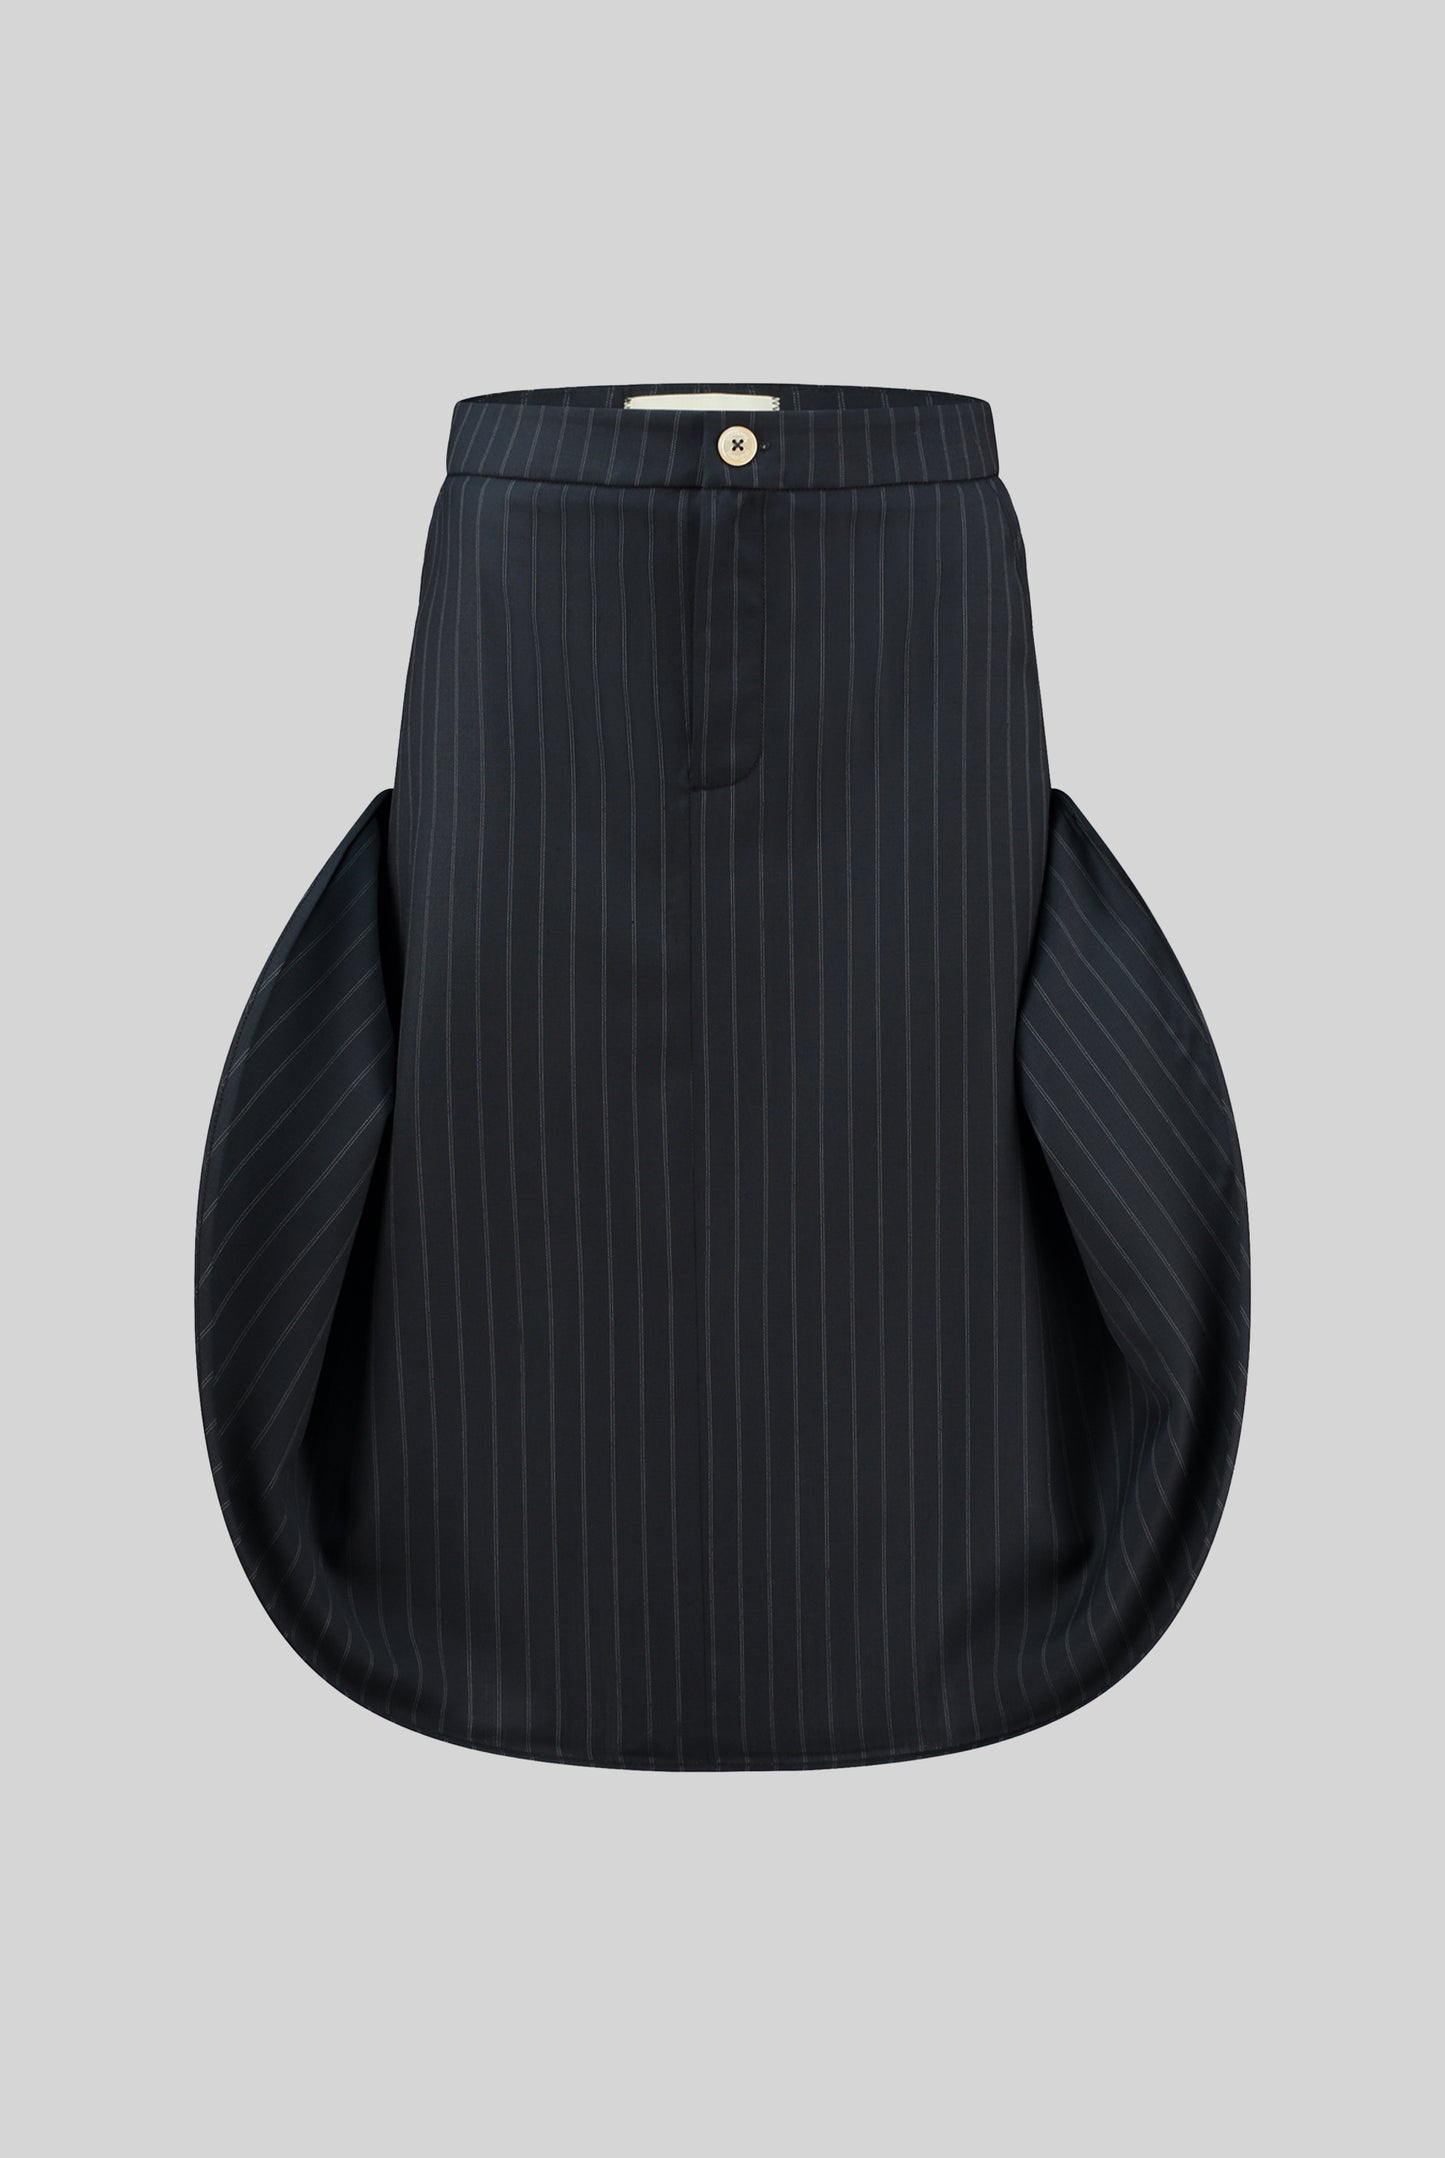 Rhubarb Skirt in Marine/Grey Double Pinstripe